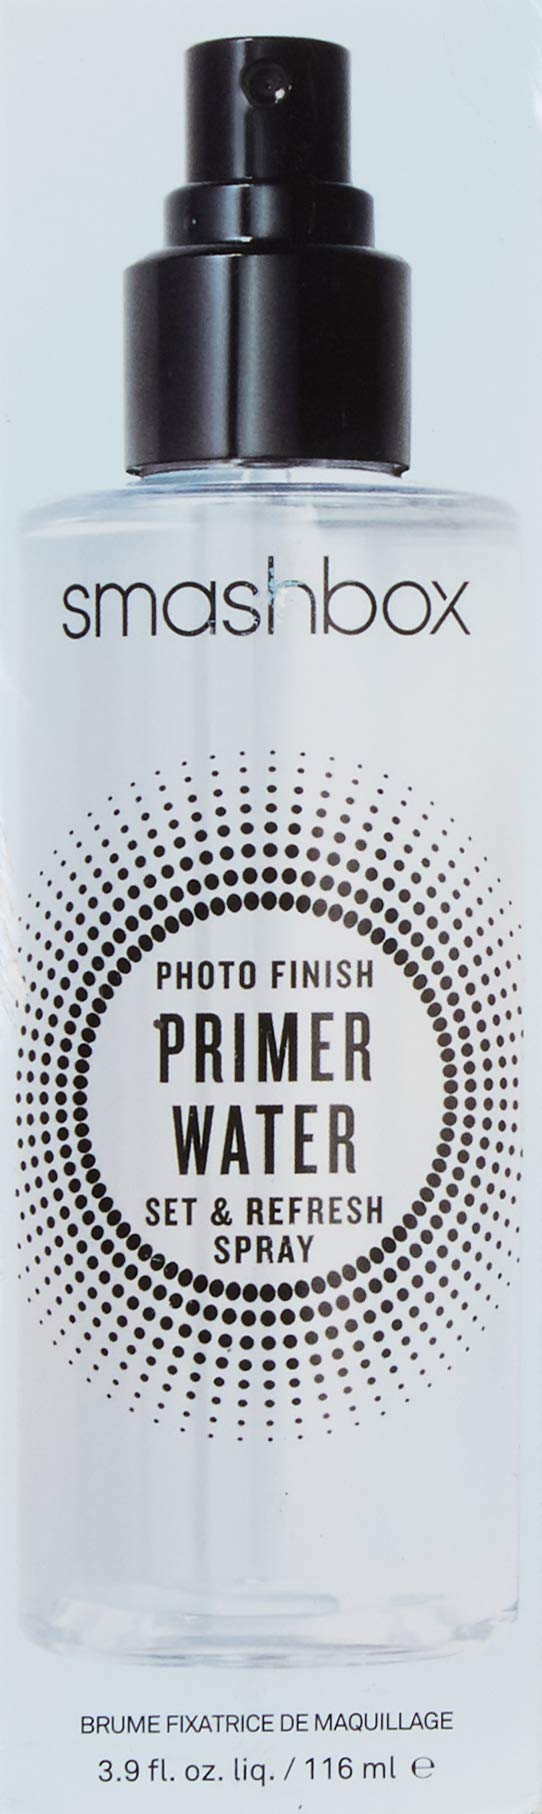 Smashbox Photo Finish Primer Water, 3.9 Fluid Ounce - $28.95